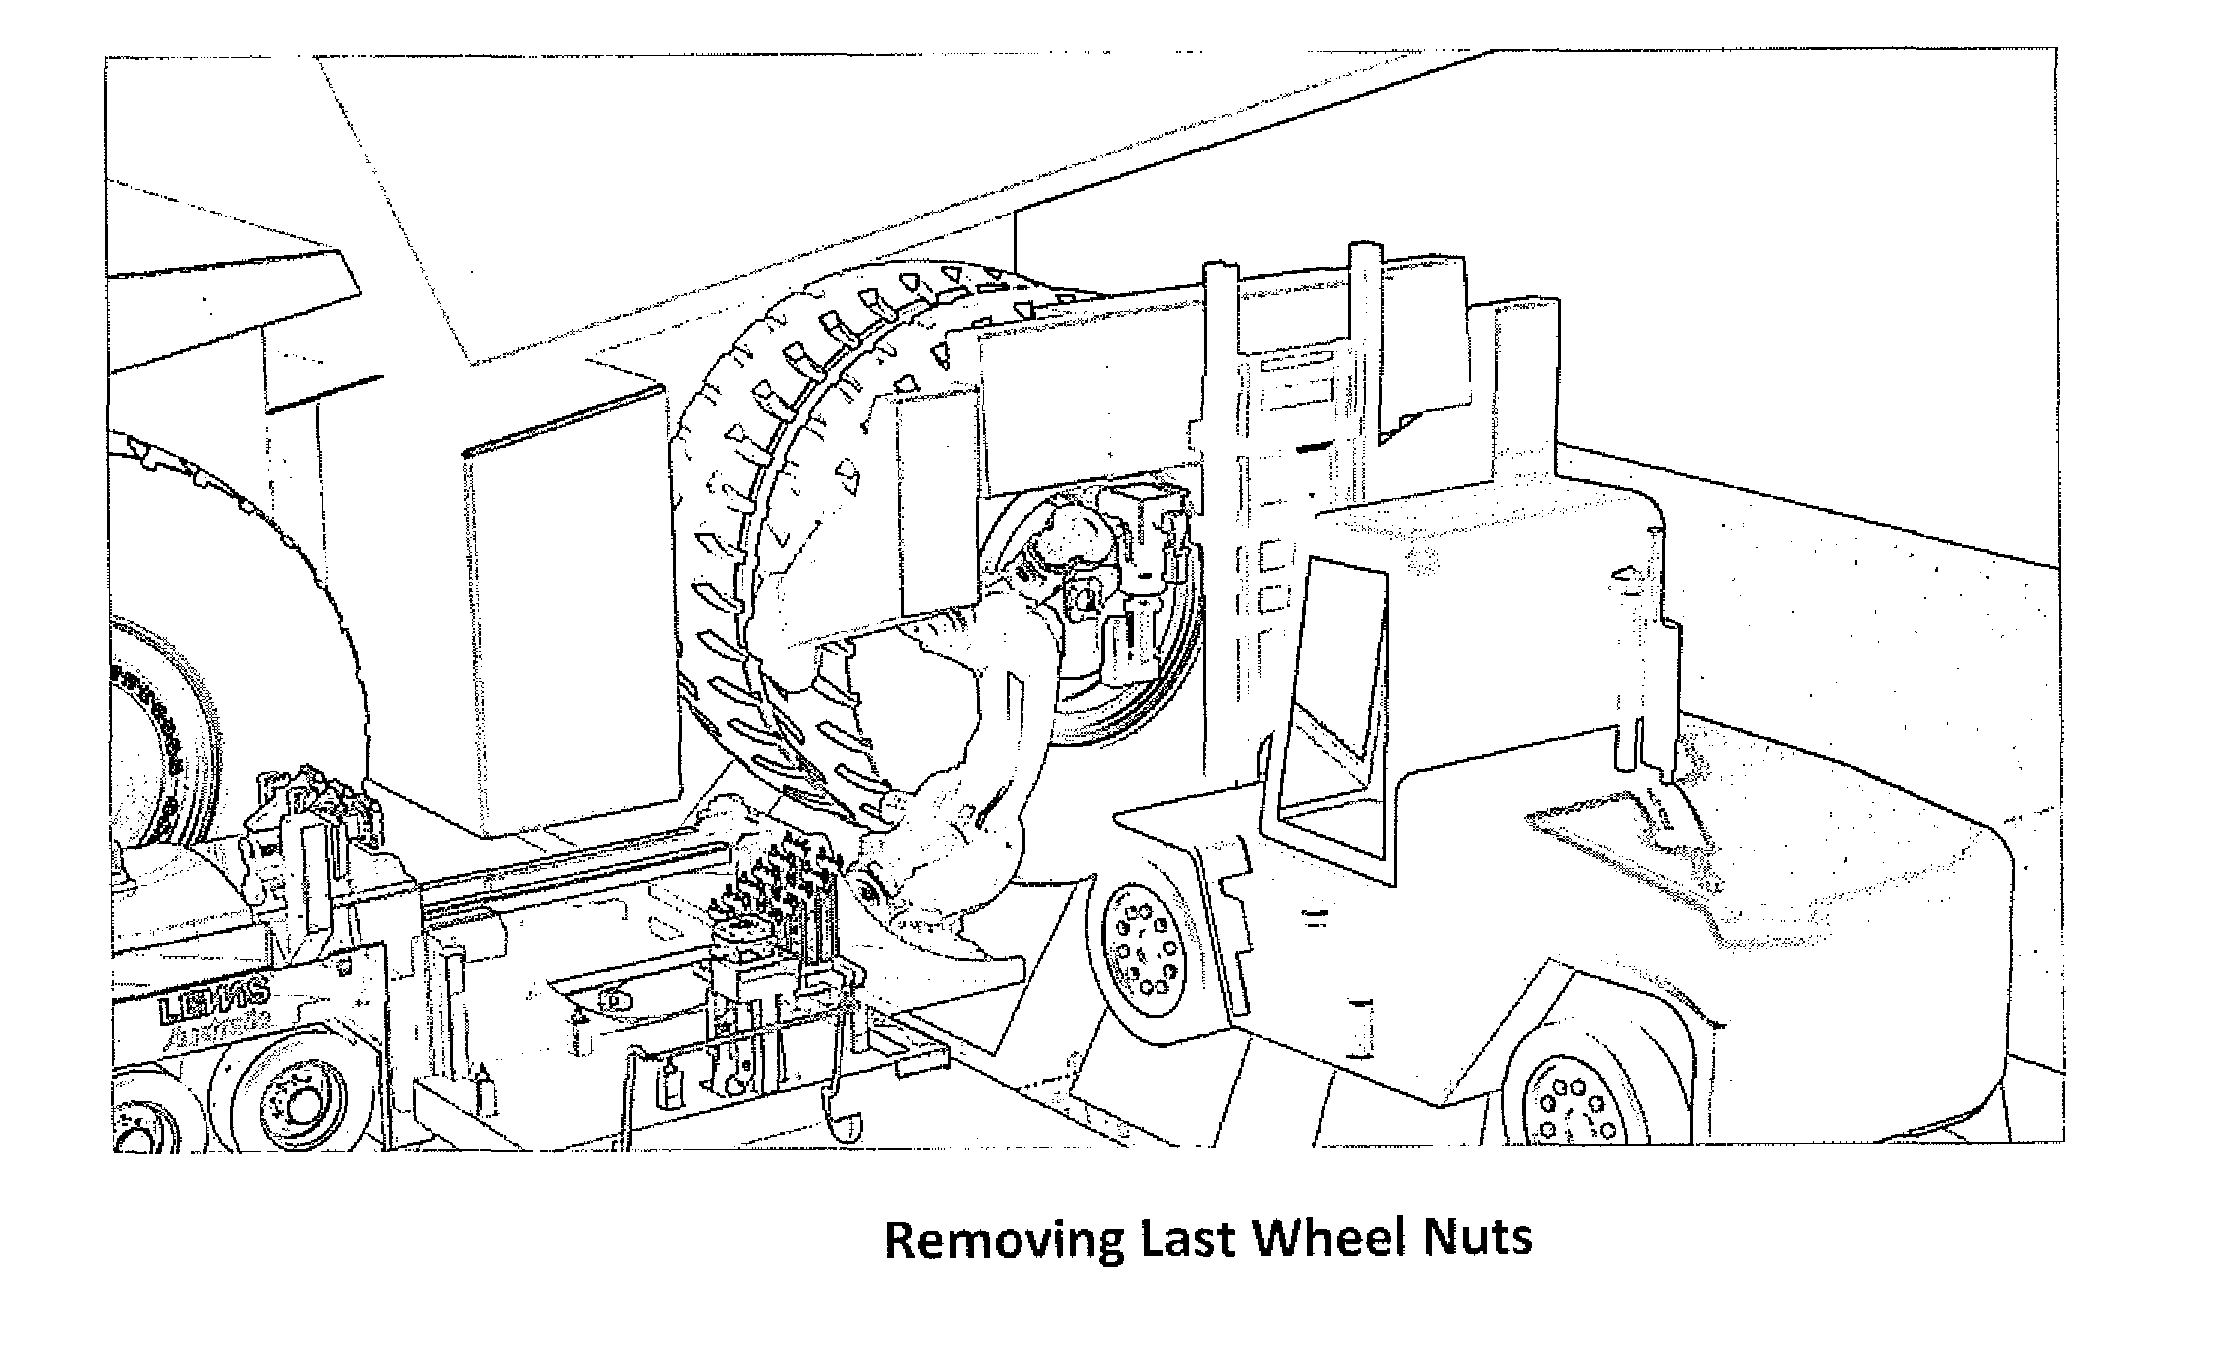 Vehicle wheel changing method